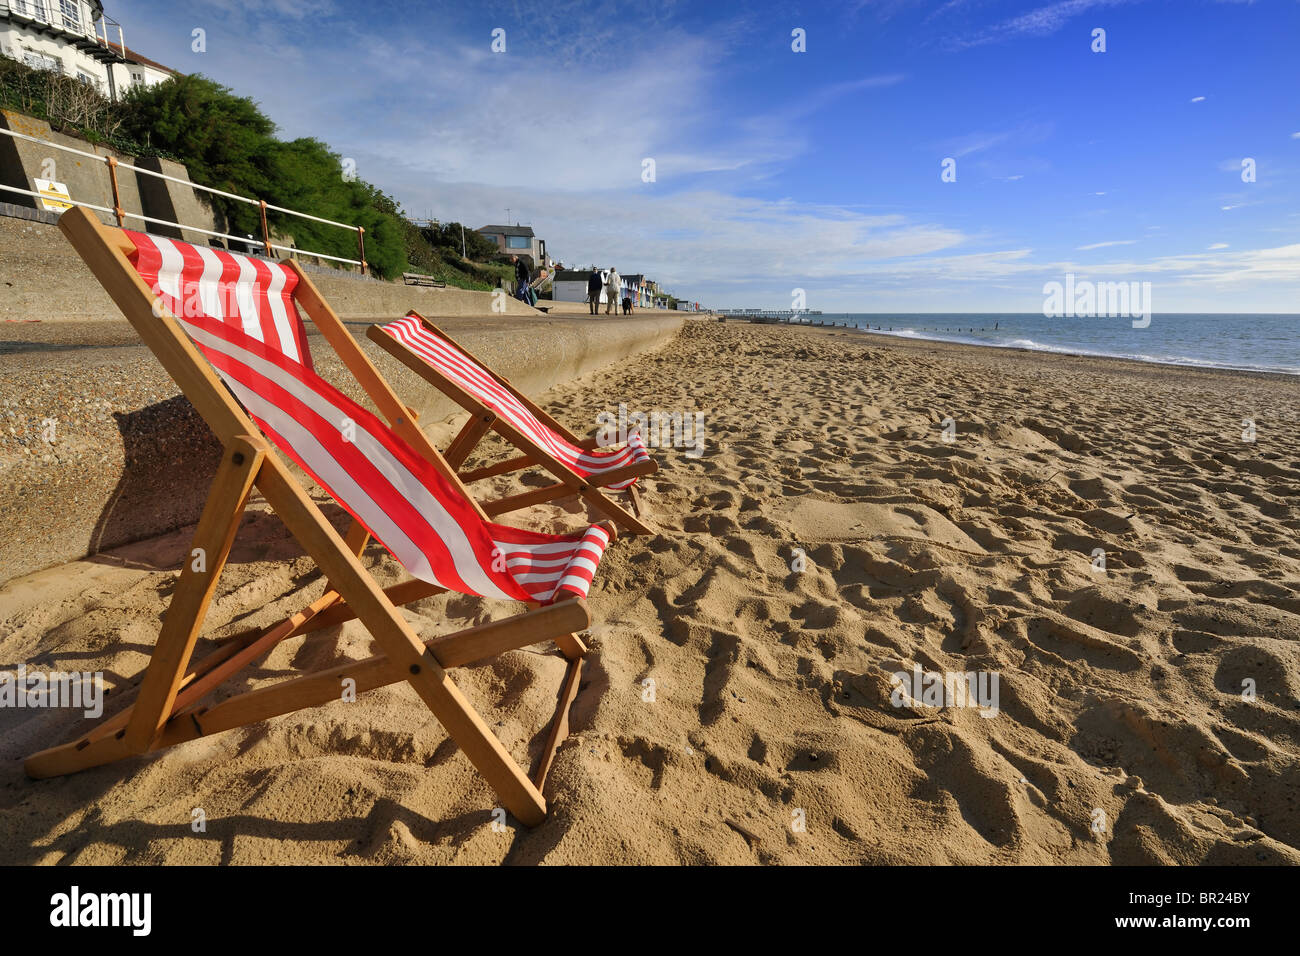 Deckchairs on the beach Stock Photo